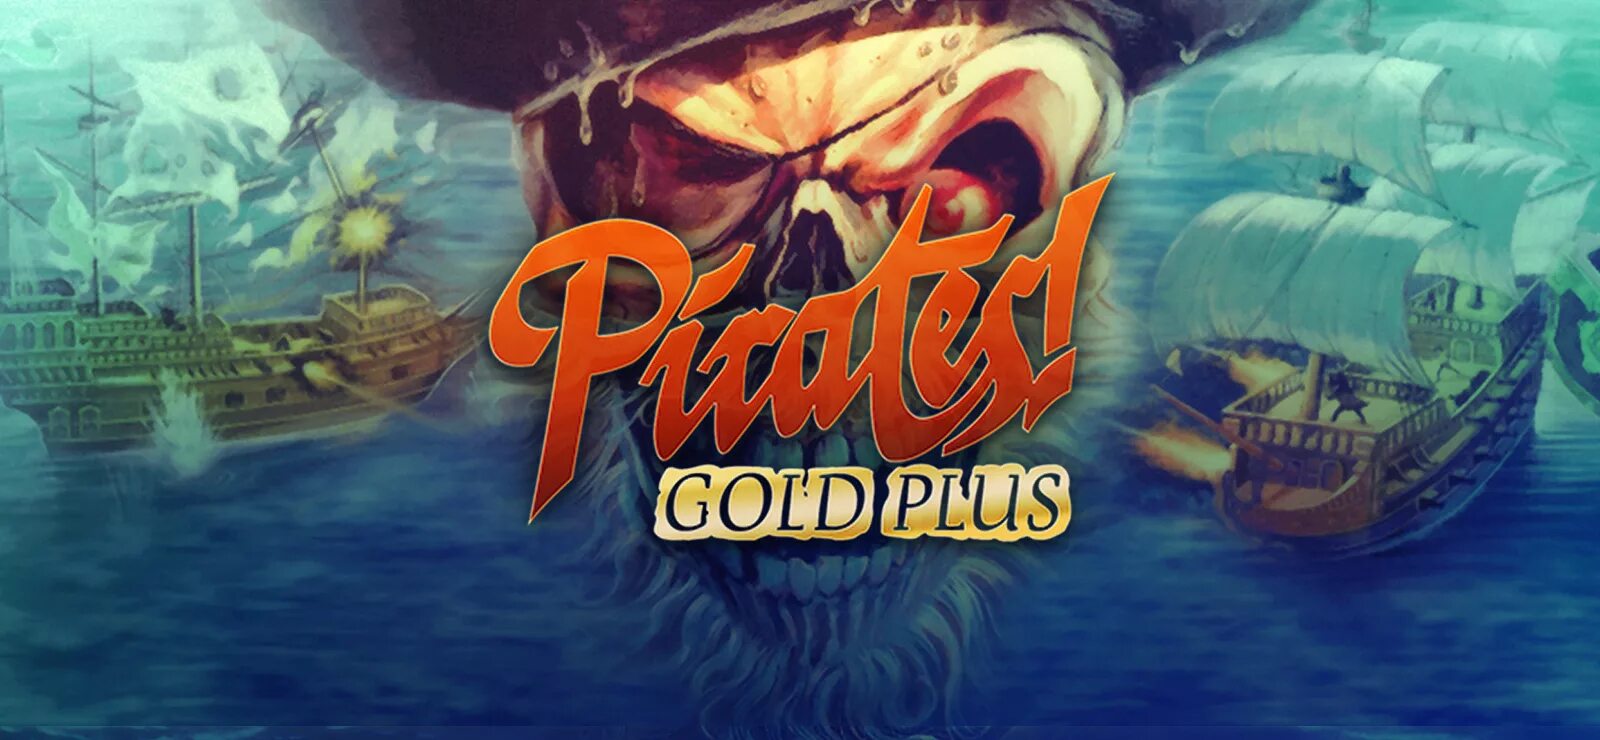 Пираты Голд игра. Pirates Gold Sega. Pirates Gold Plus. Sid Meier's Pirates! Сега. Бесплатная игра про пиратов в стиме